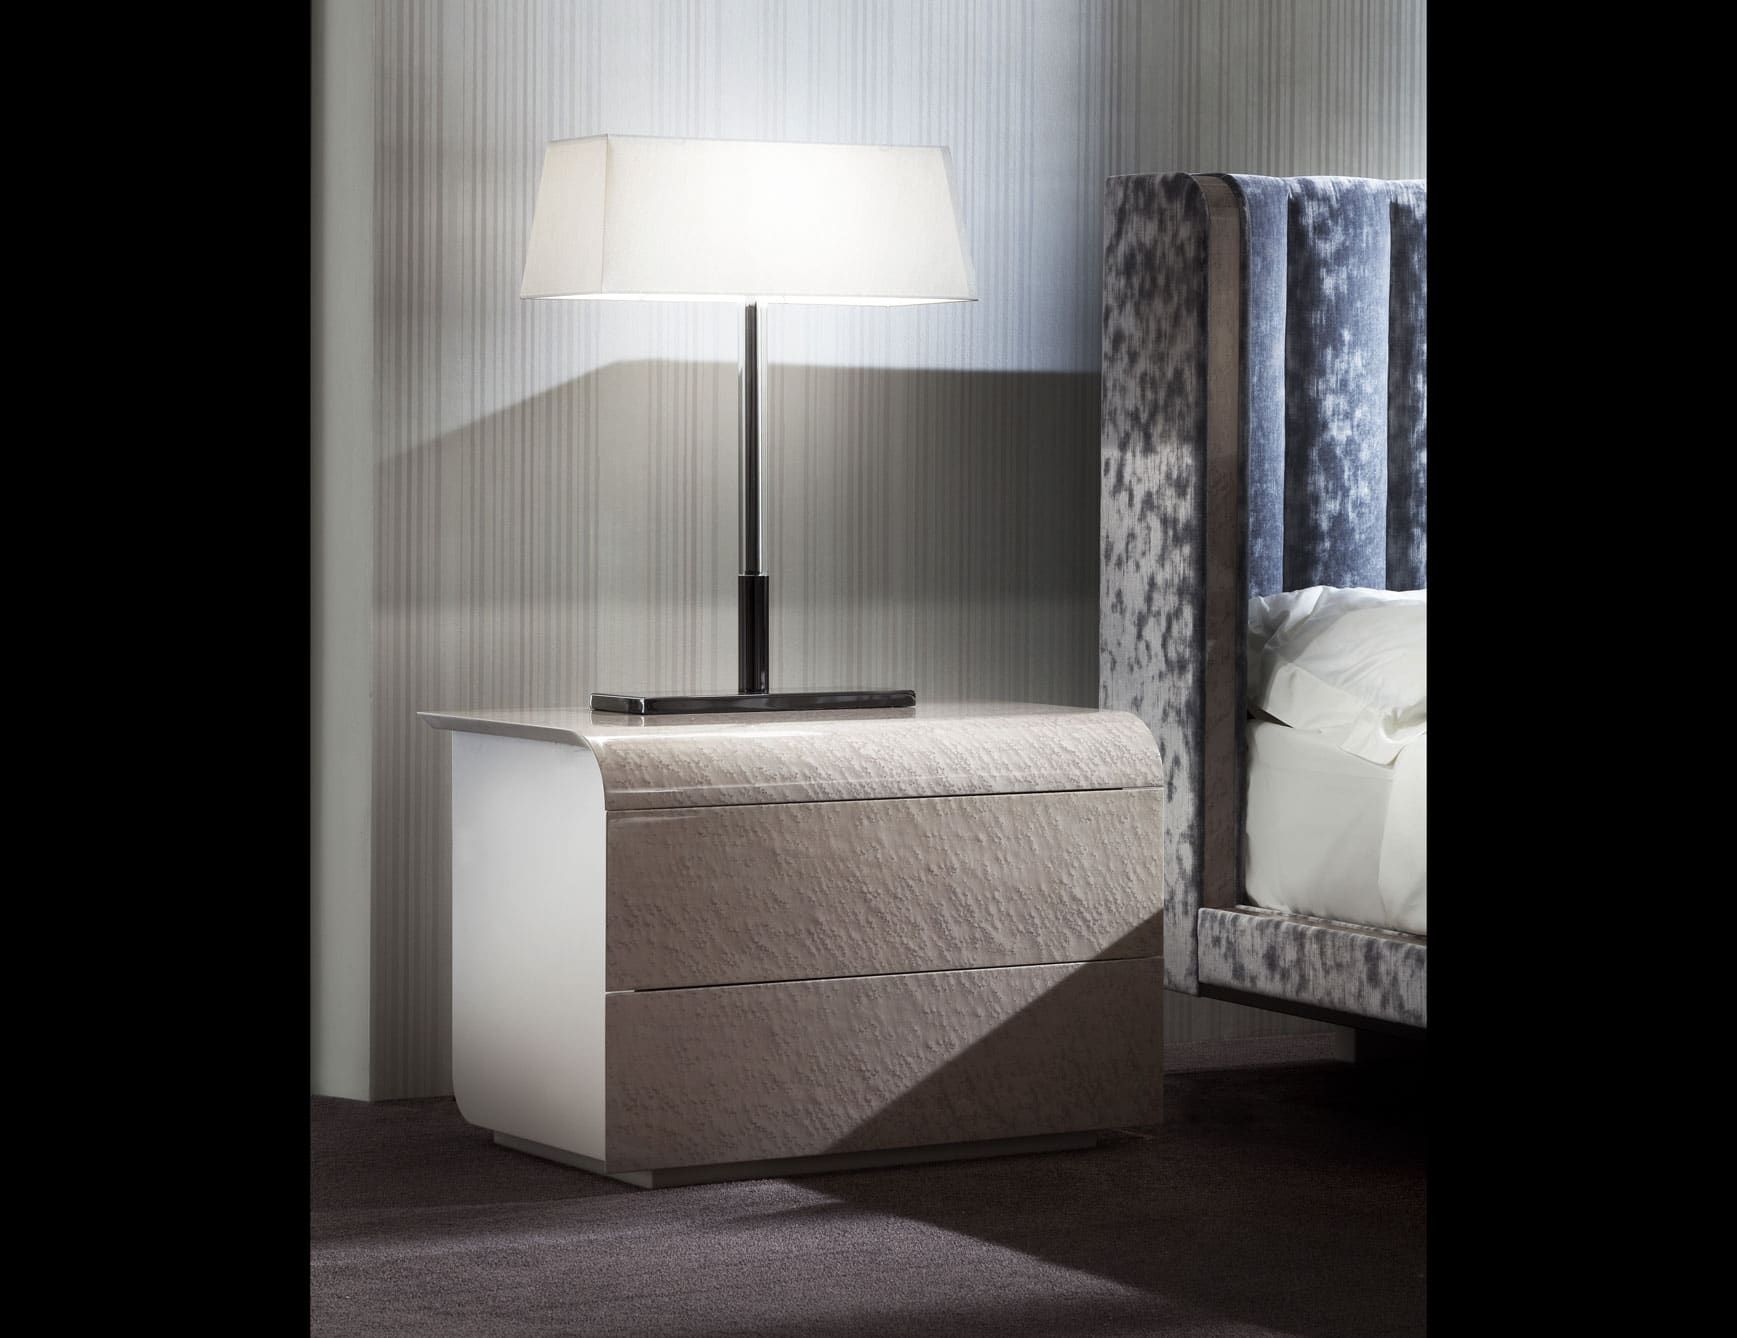 Liaisons modern Italian nightstand with beige Toscano high gloss wood